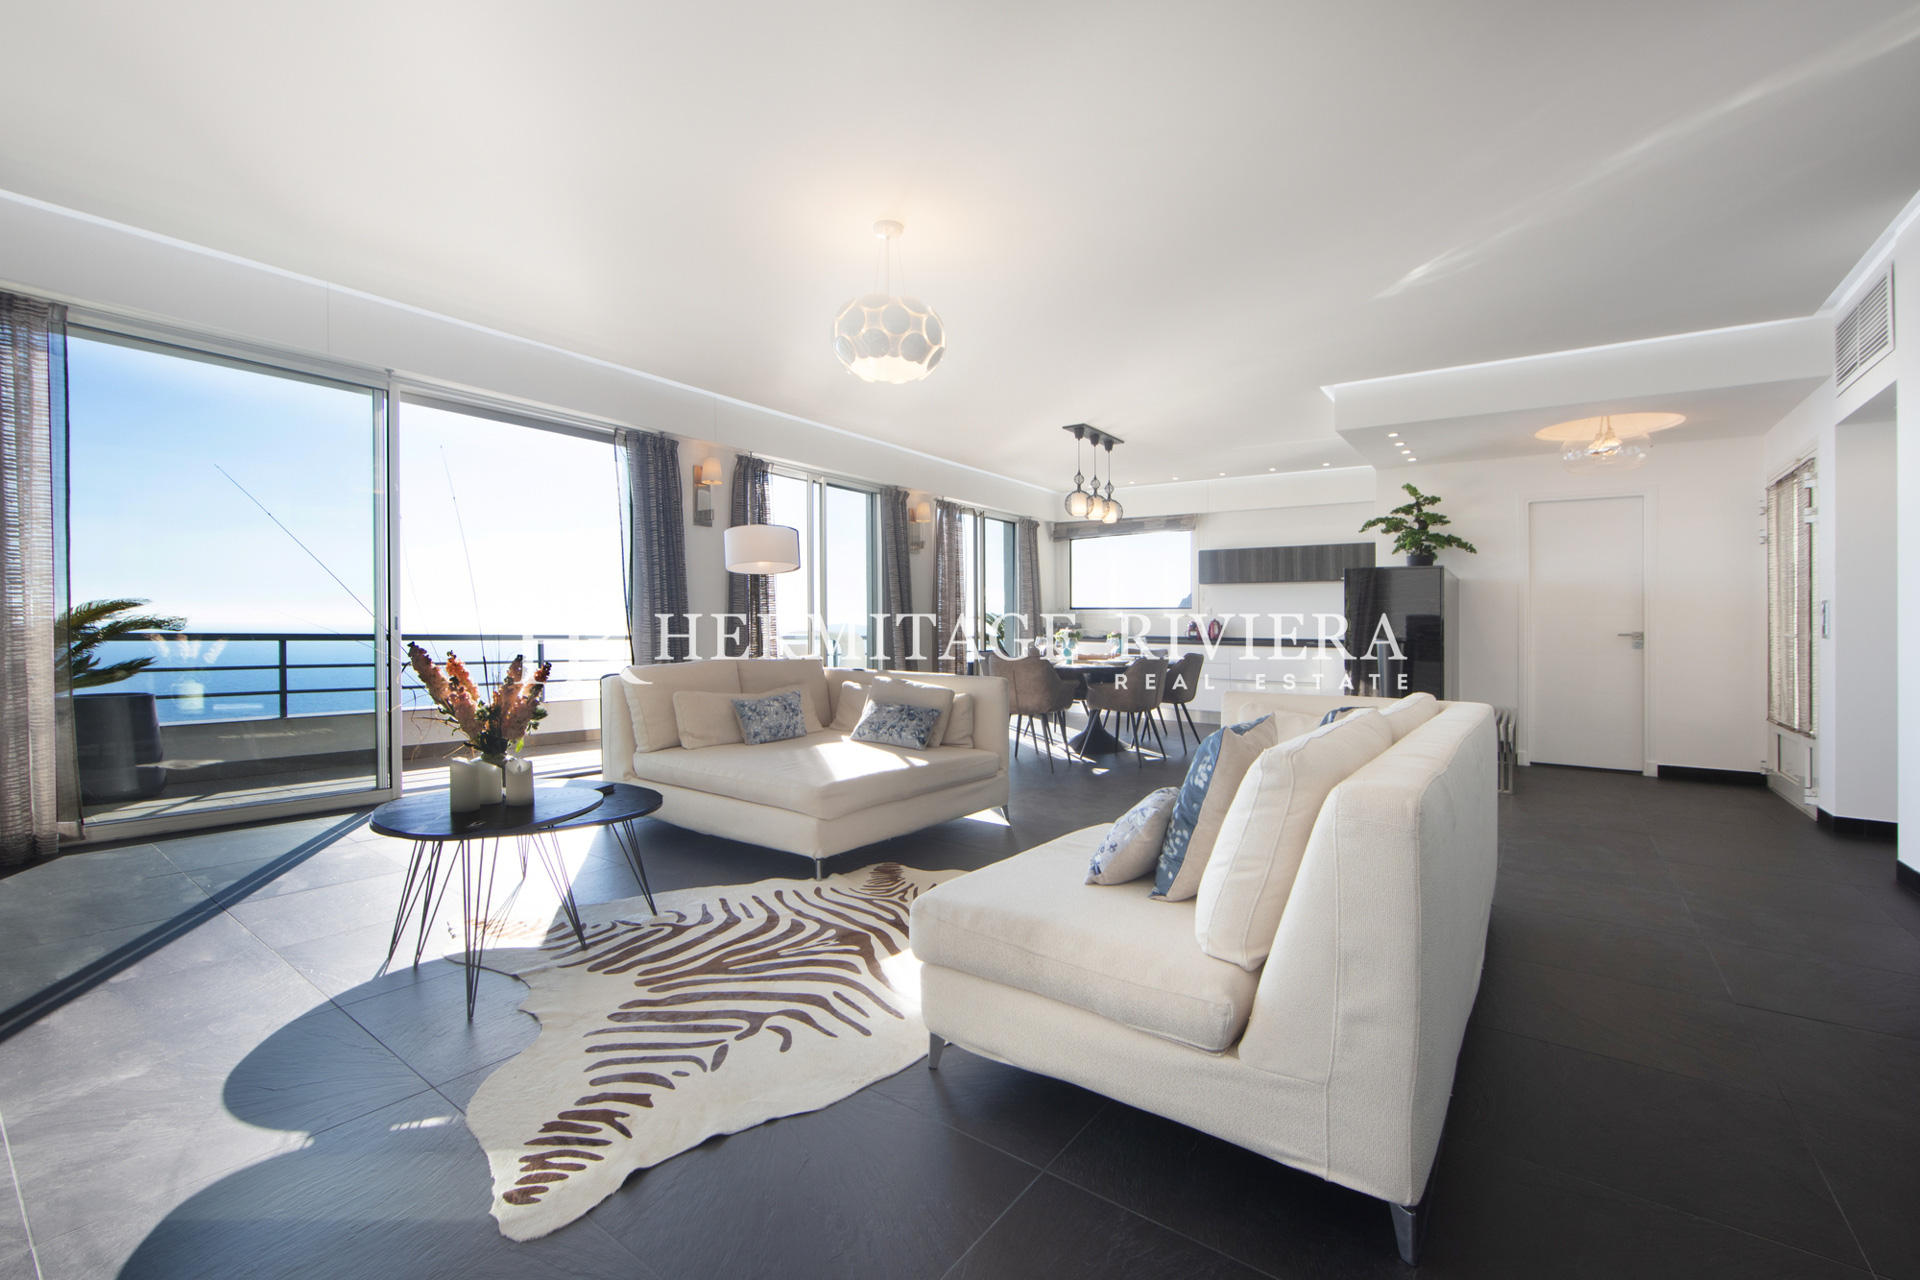 Stunning contemporary villa overlooking Mala Beach (image 11)